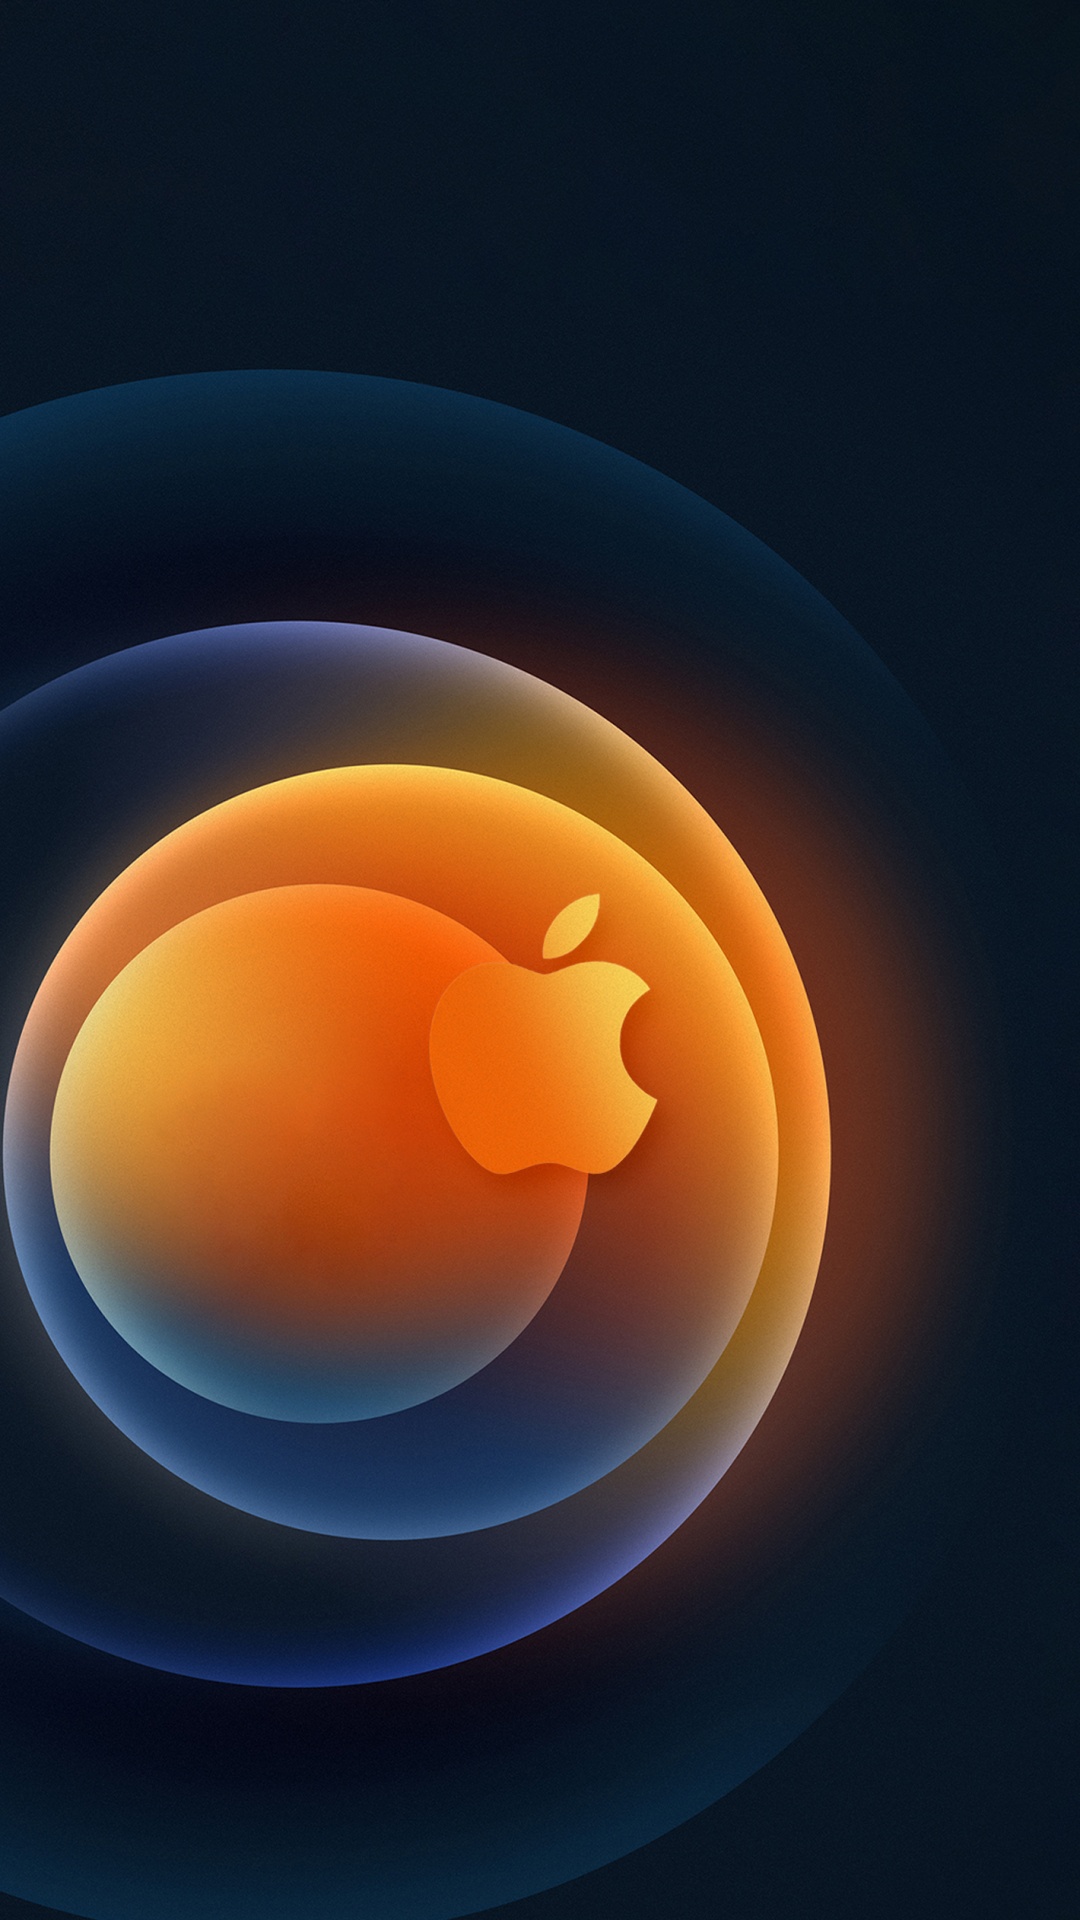 Apple, IPhone, 苹果, 橙色, 色彩 壁纸 1080x1920 允许